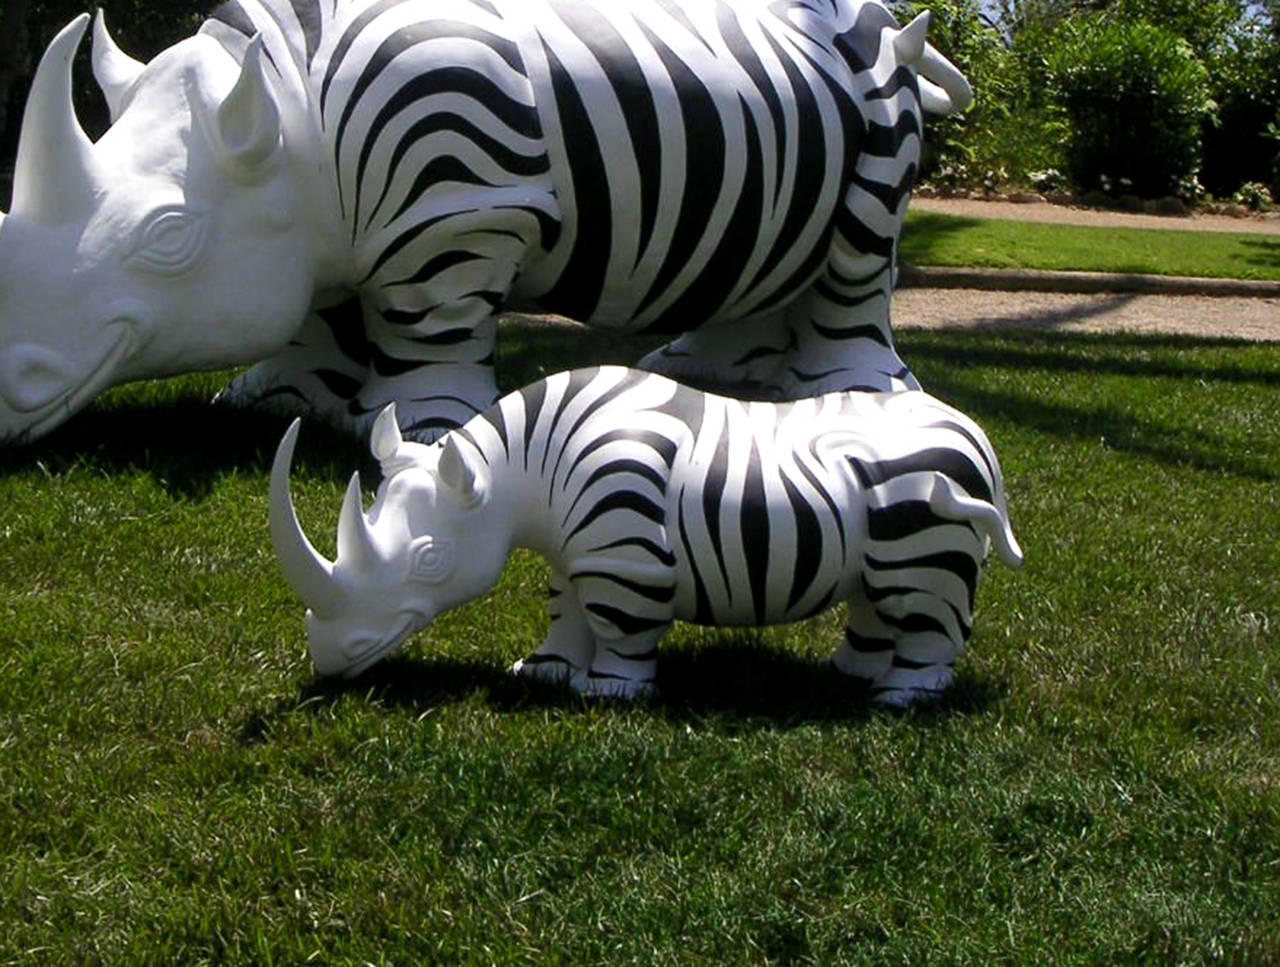 Figurative Sculpture Patrick Schumacher - Rhinozebros - Rhinoceros orné d'une peau de zèbre - Sculpture en résine